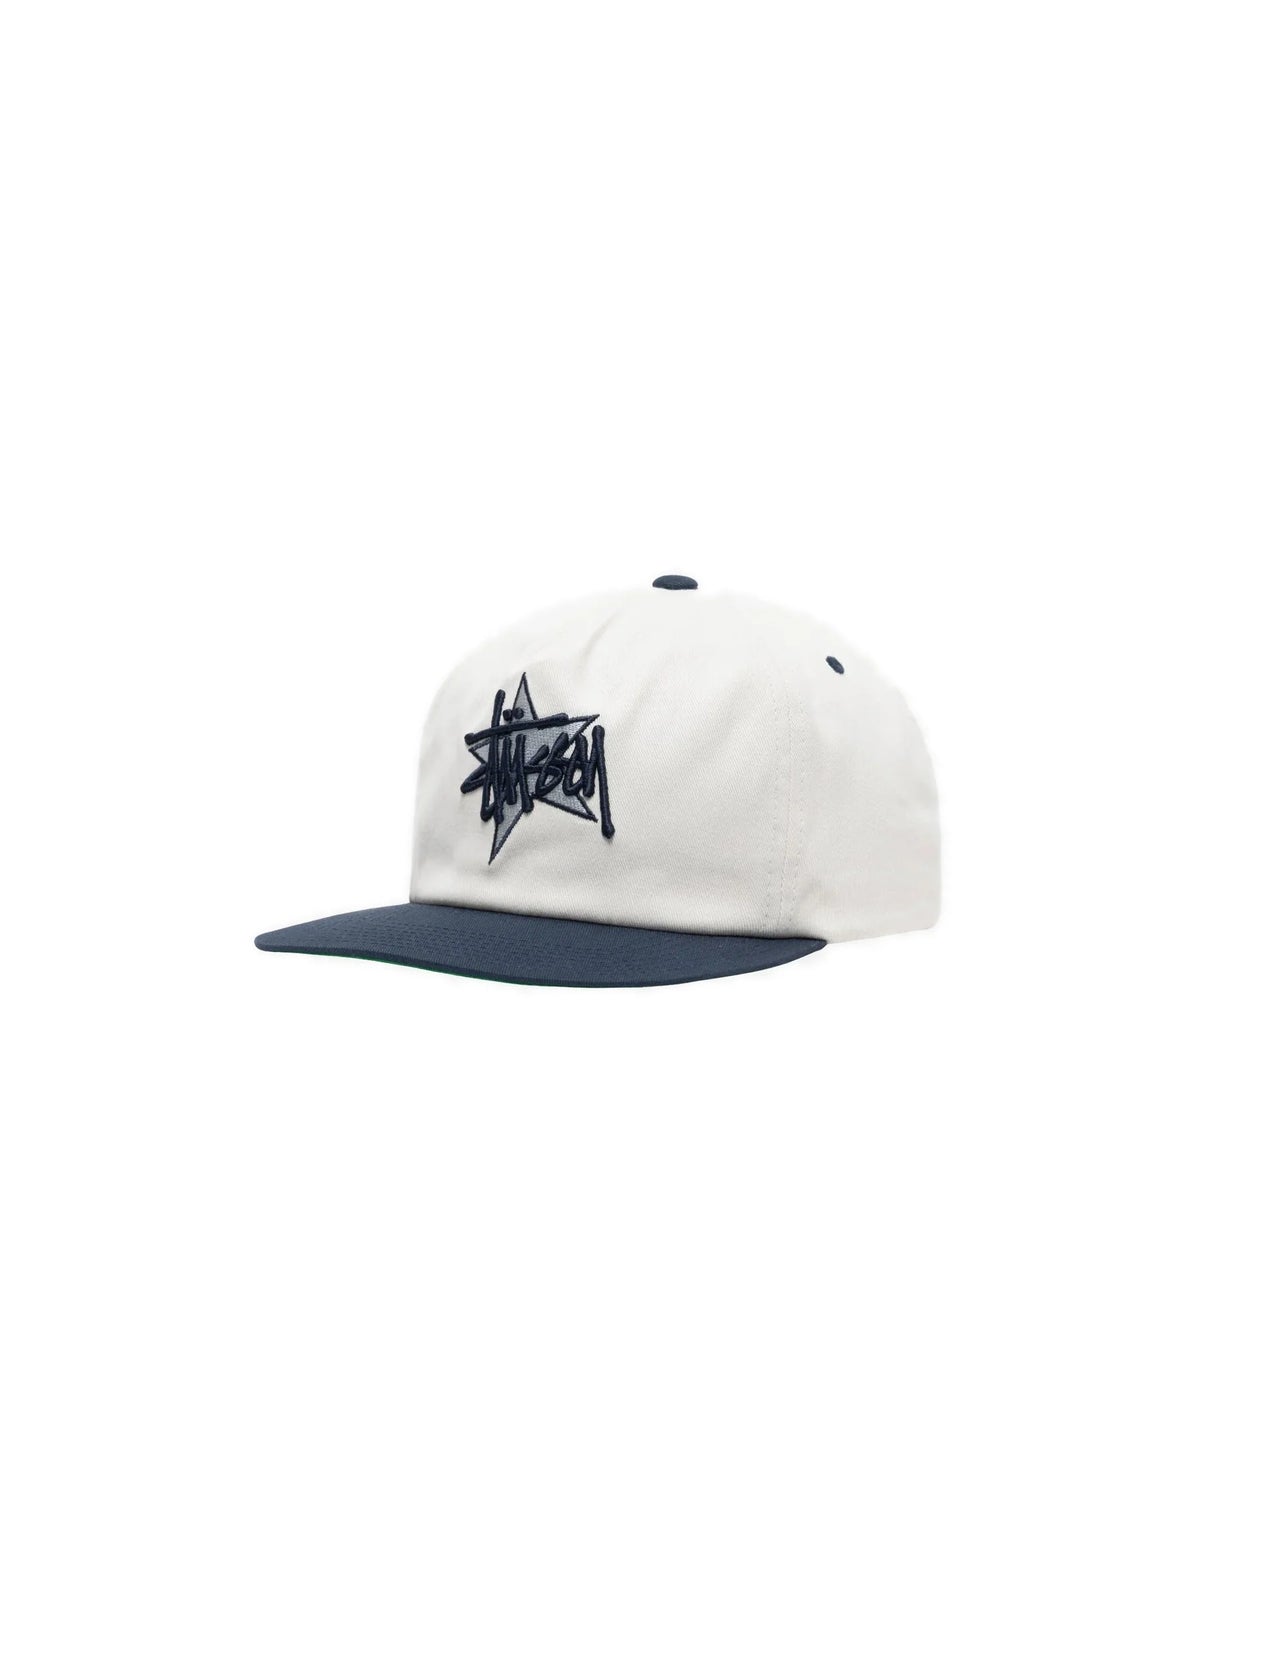 BASIC STAR STRAPBACK CAP WHITE